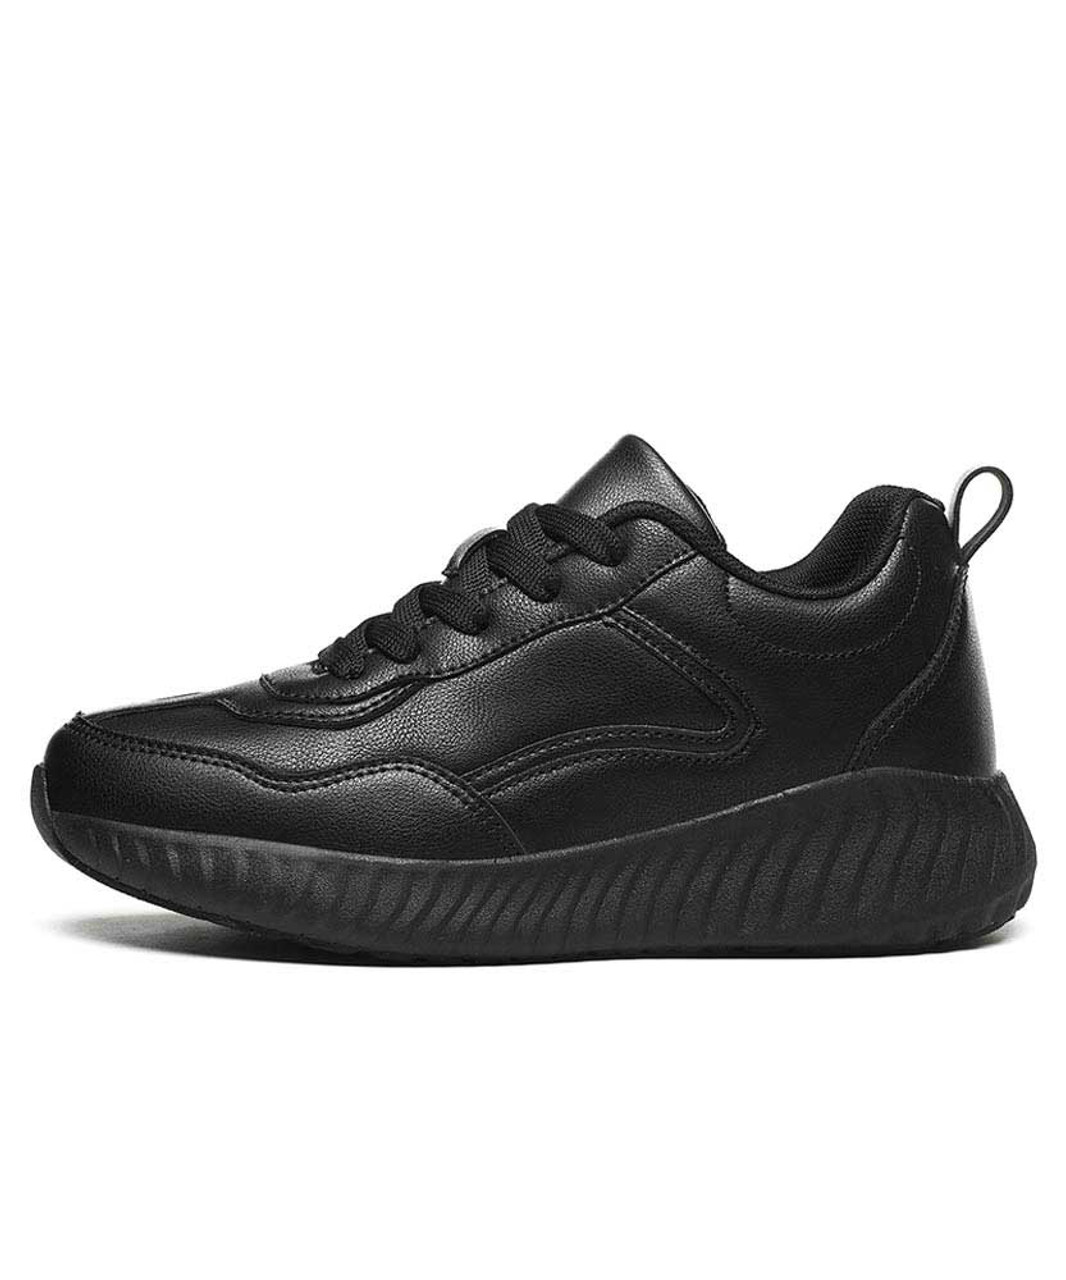 Black casual plain lace up shoe sneaker | Womens sneakers shoes online ...